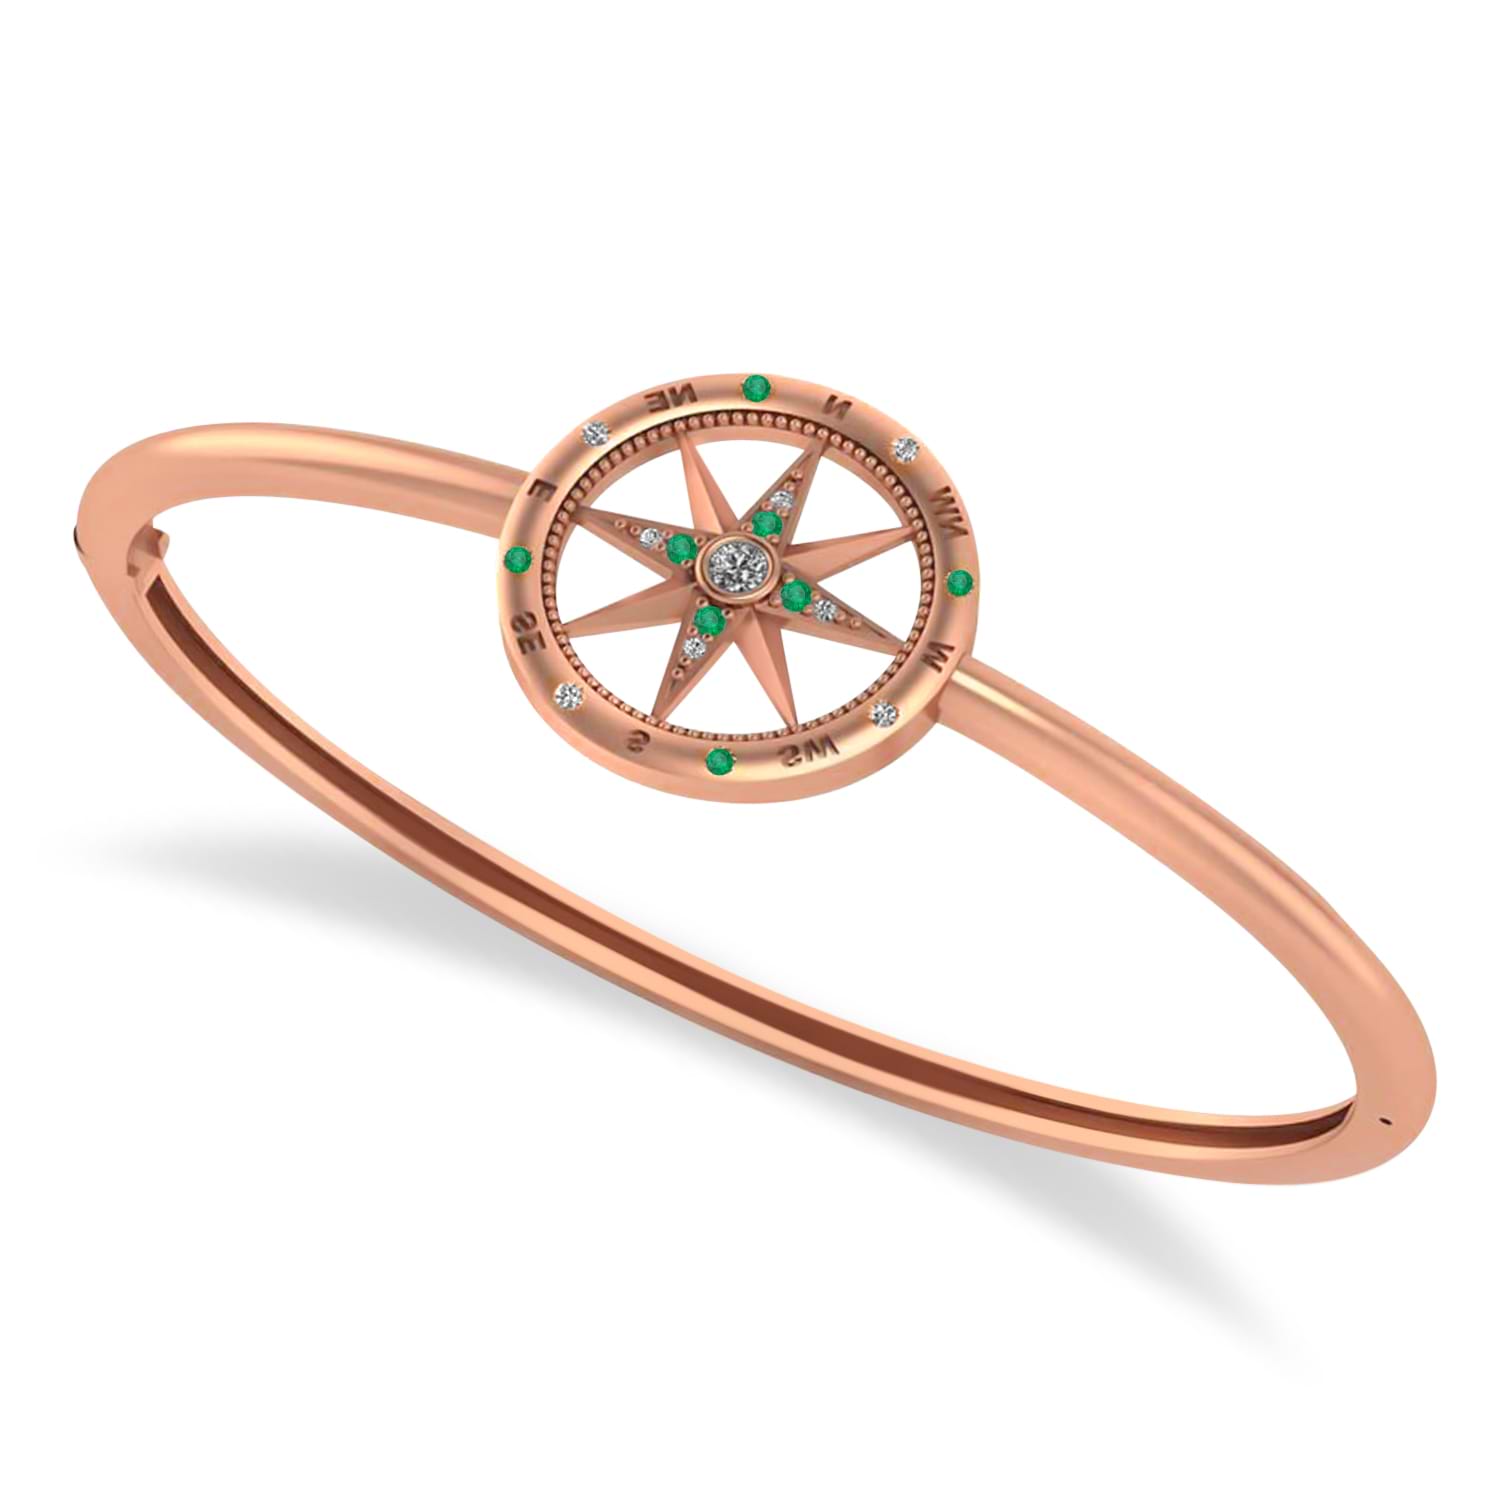 Emerald & Diamond Compass Bangle Bracelet 14k Rose Gold (0.19ct)